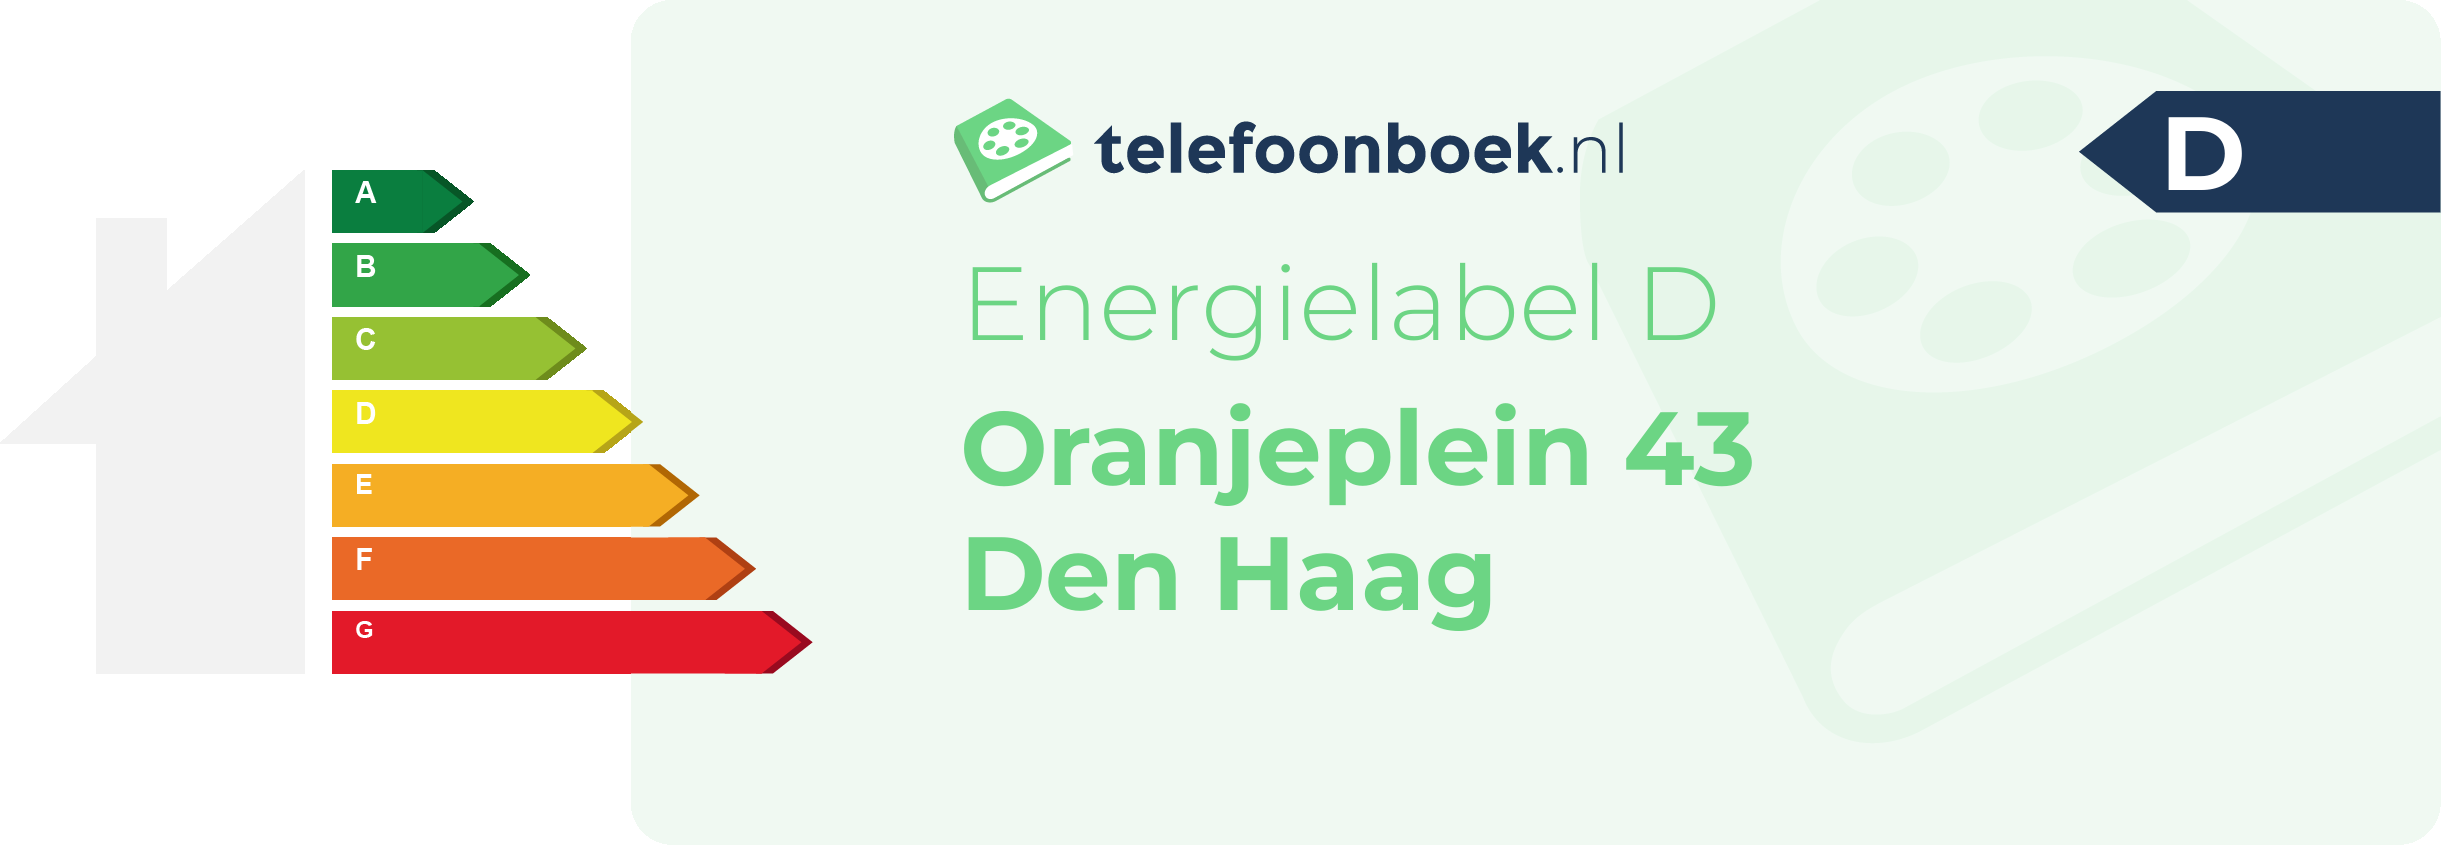 Energielabel Oranjeplein 43 Den Haag